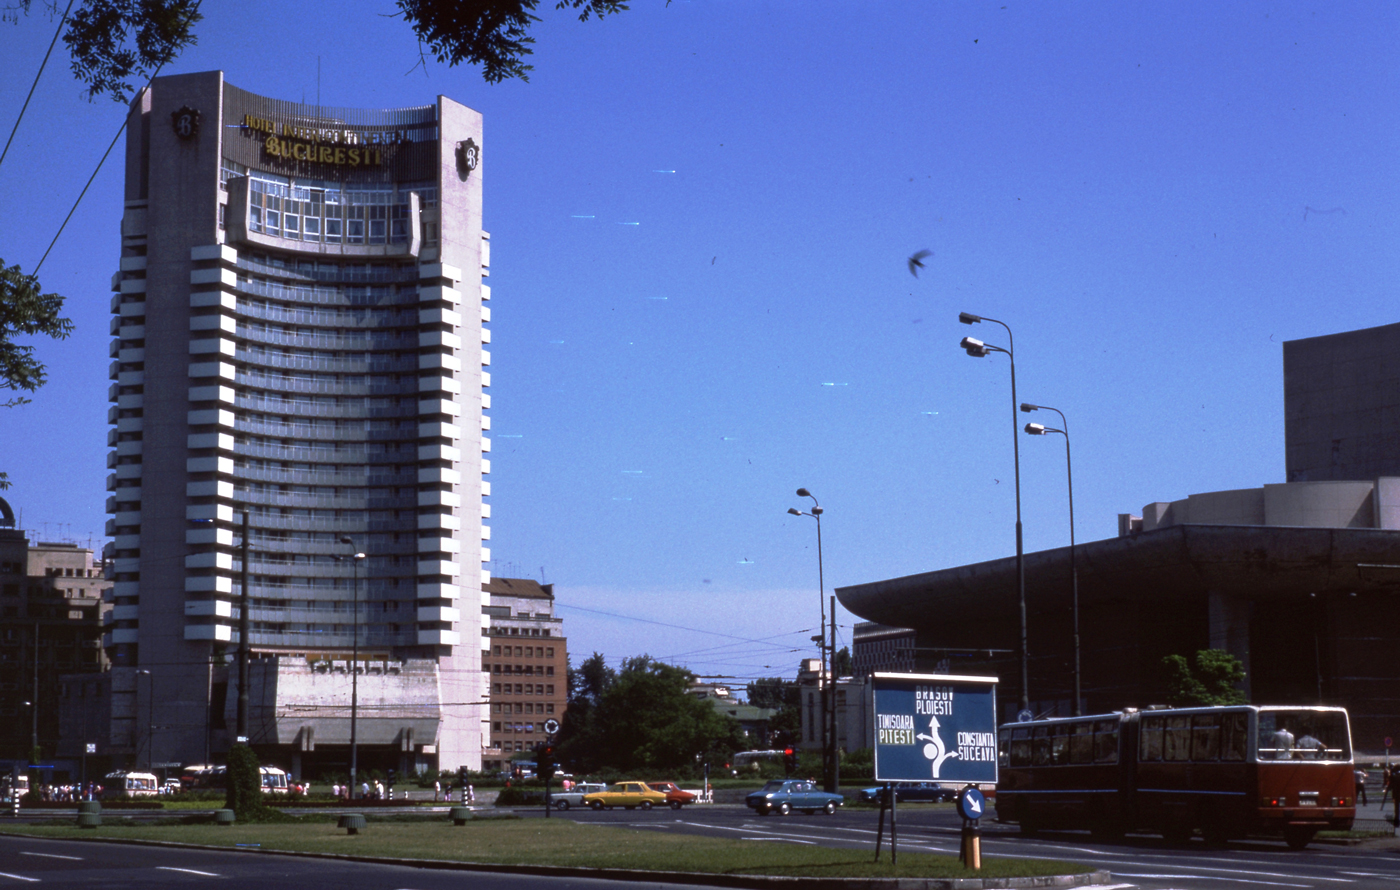 Hotel Intercontinental Bucharest. Image: RudolfSimon under a CC license via Wikimedia Commons